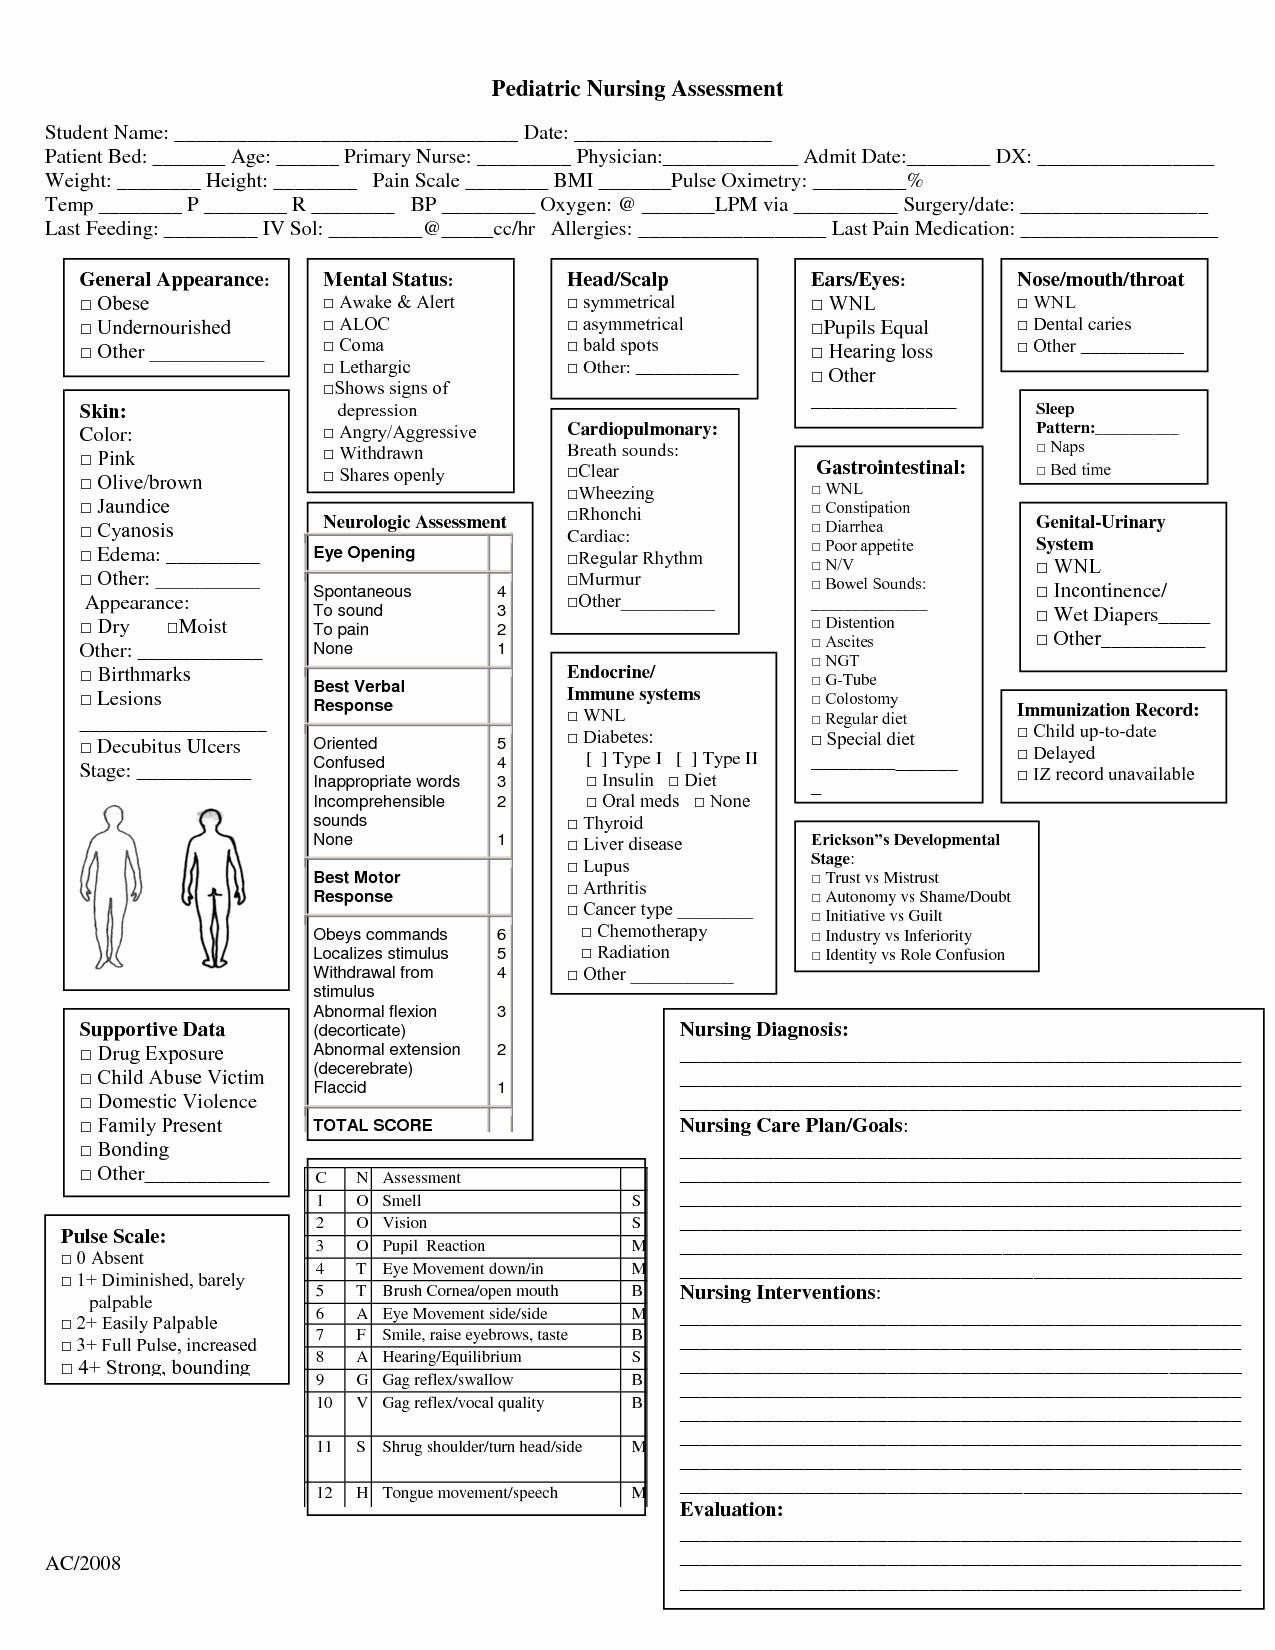 Sample Nursing assessment form